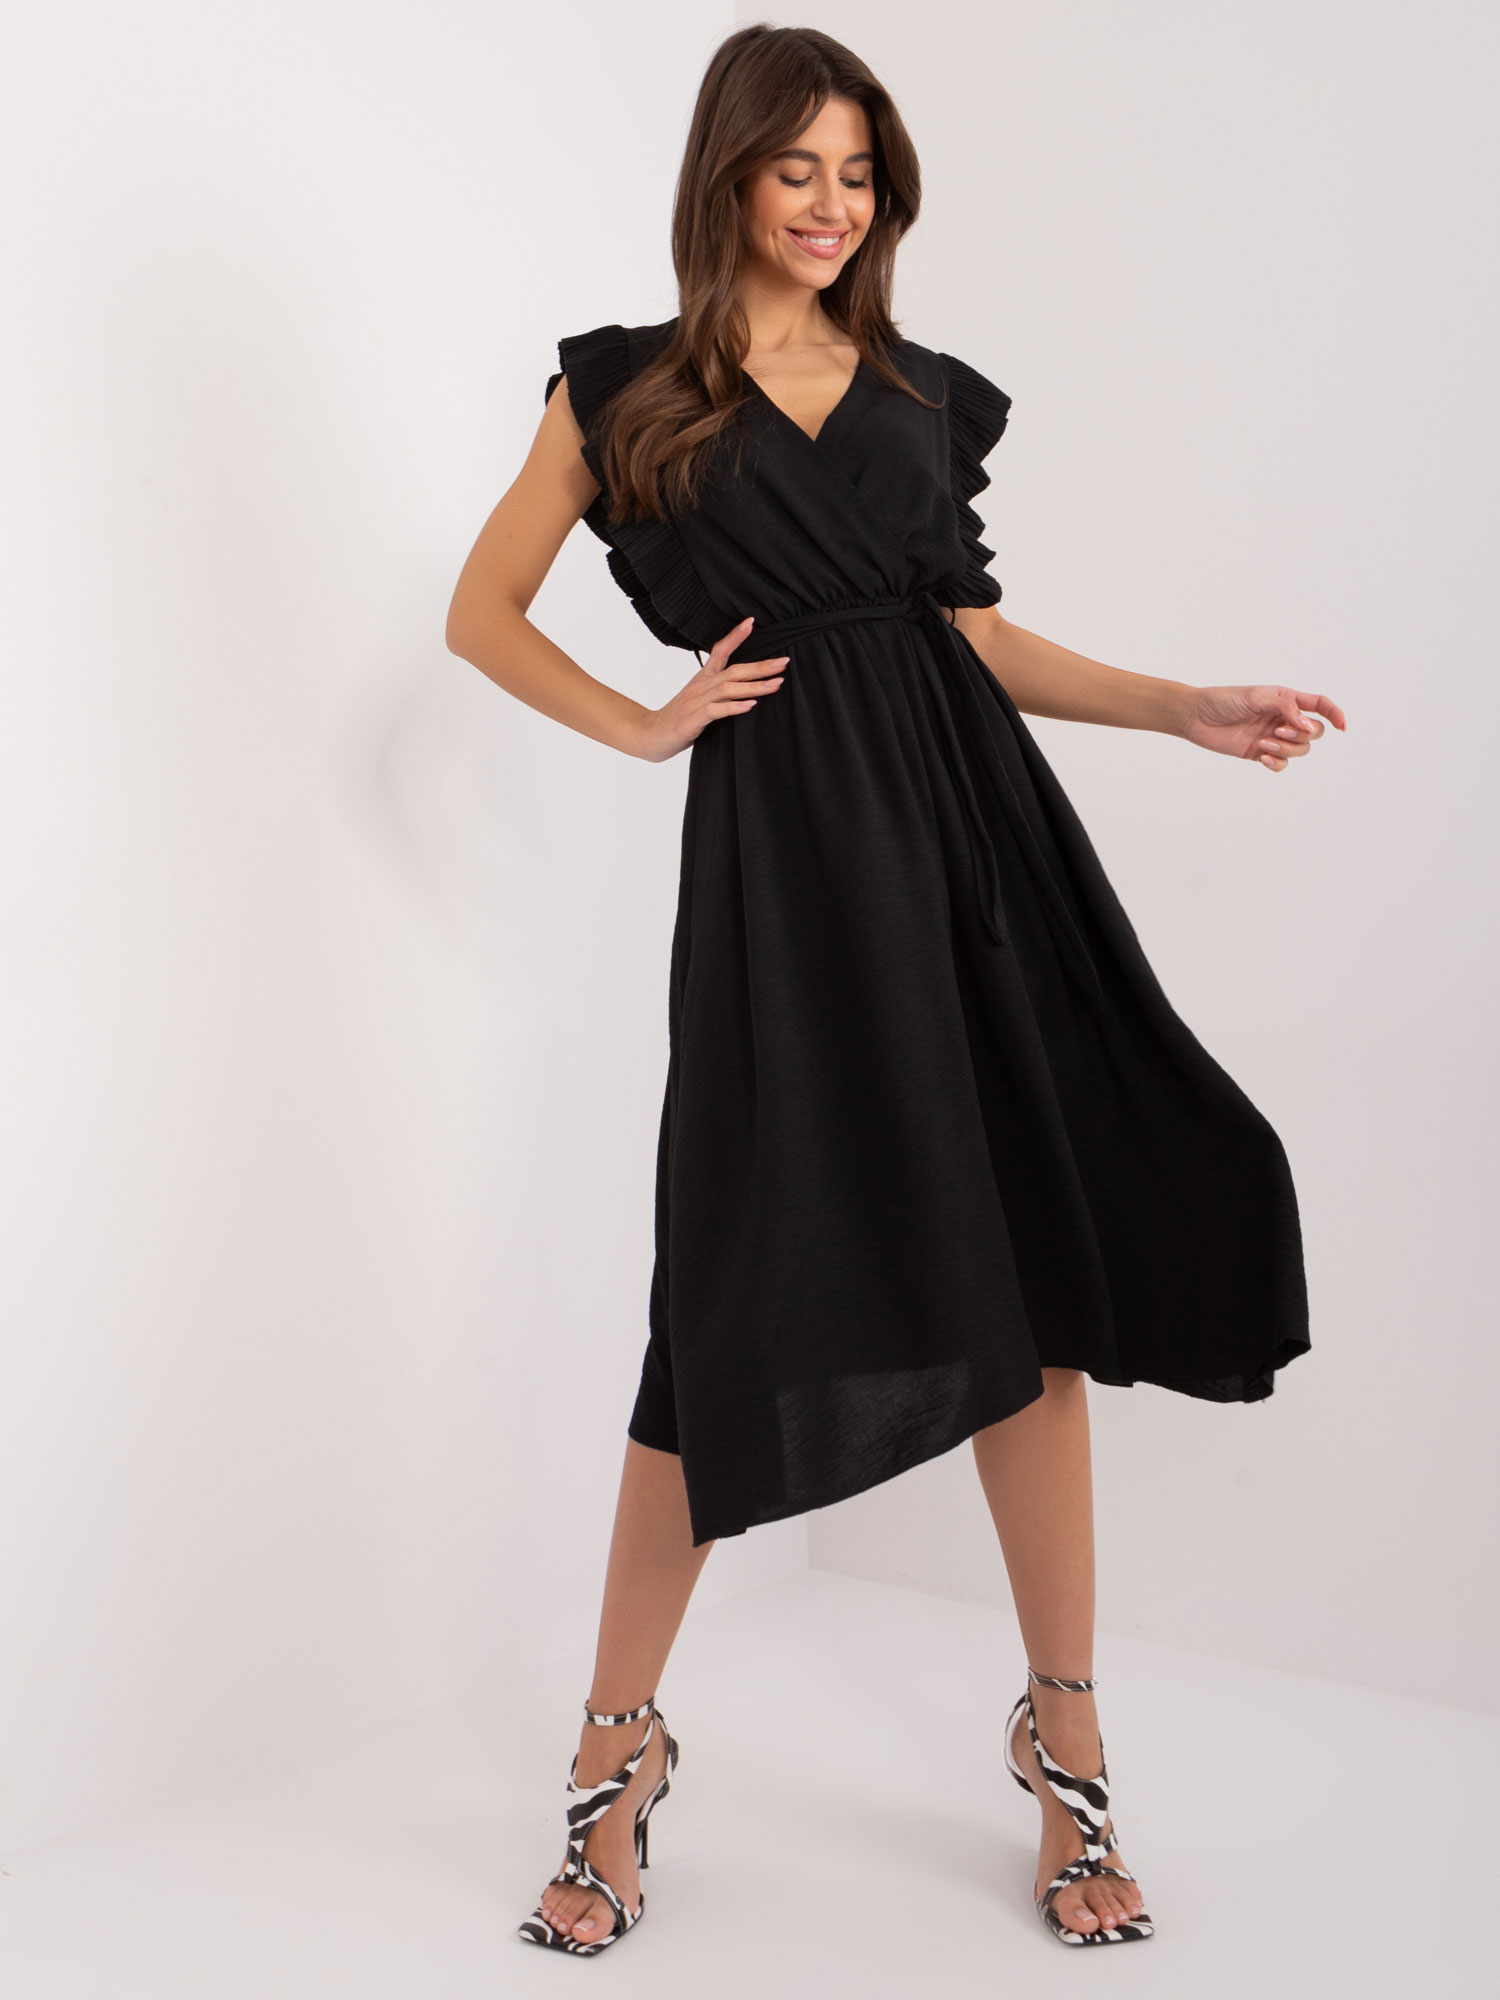 Black asymmetrical sleeveless dress